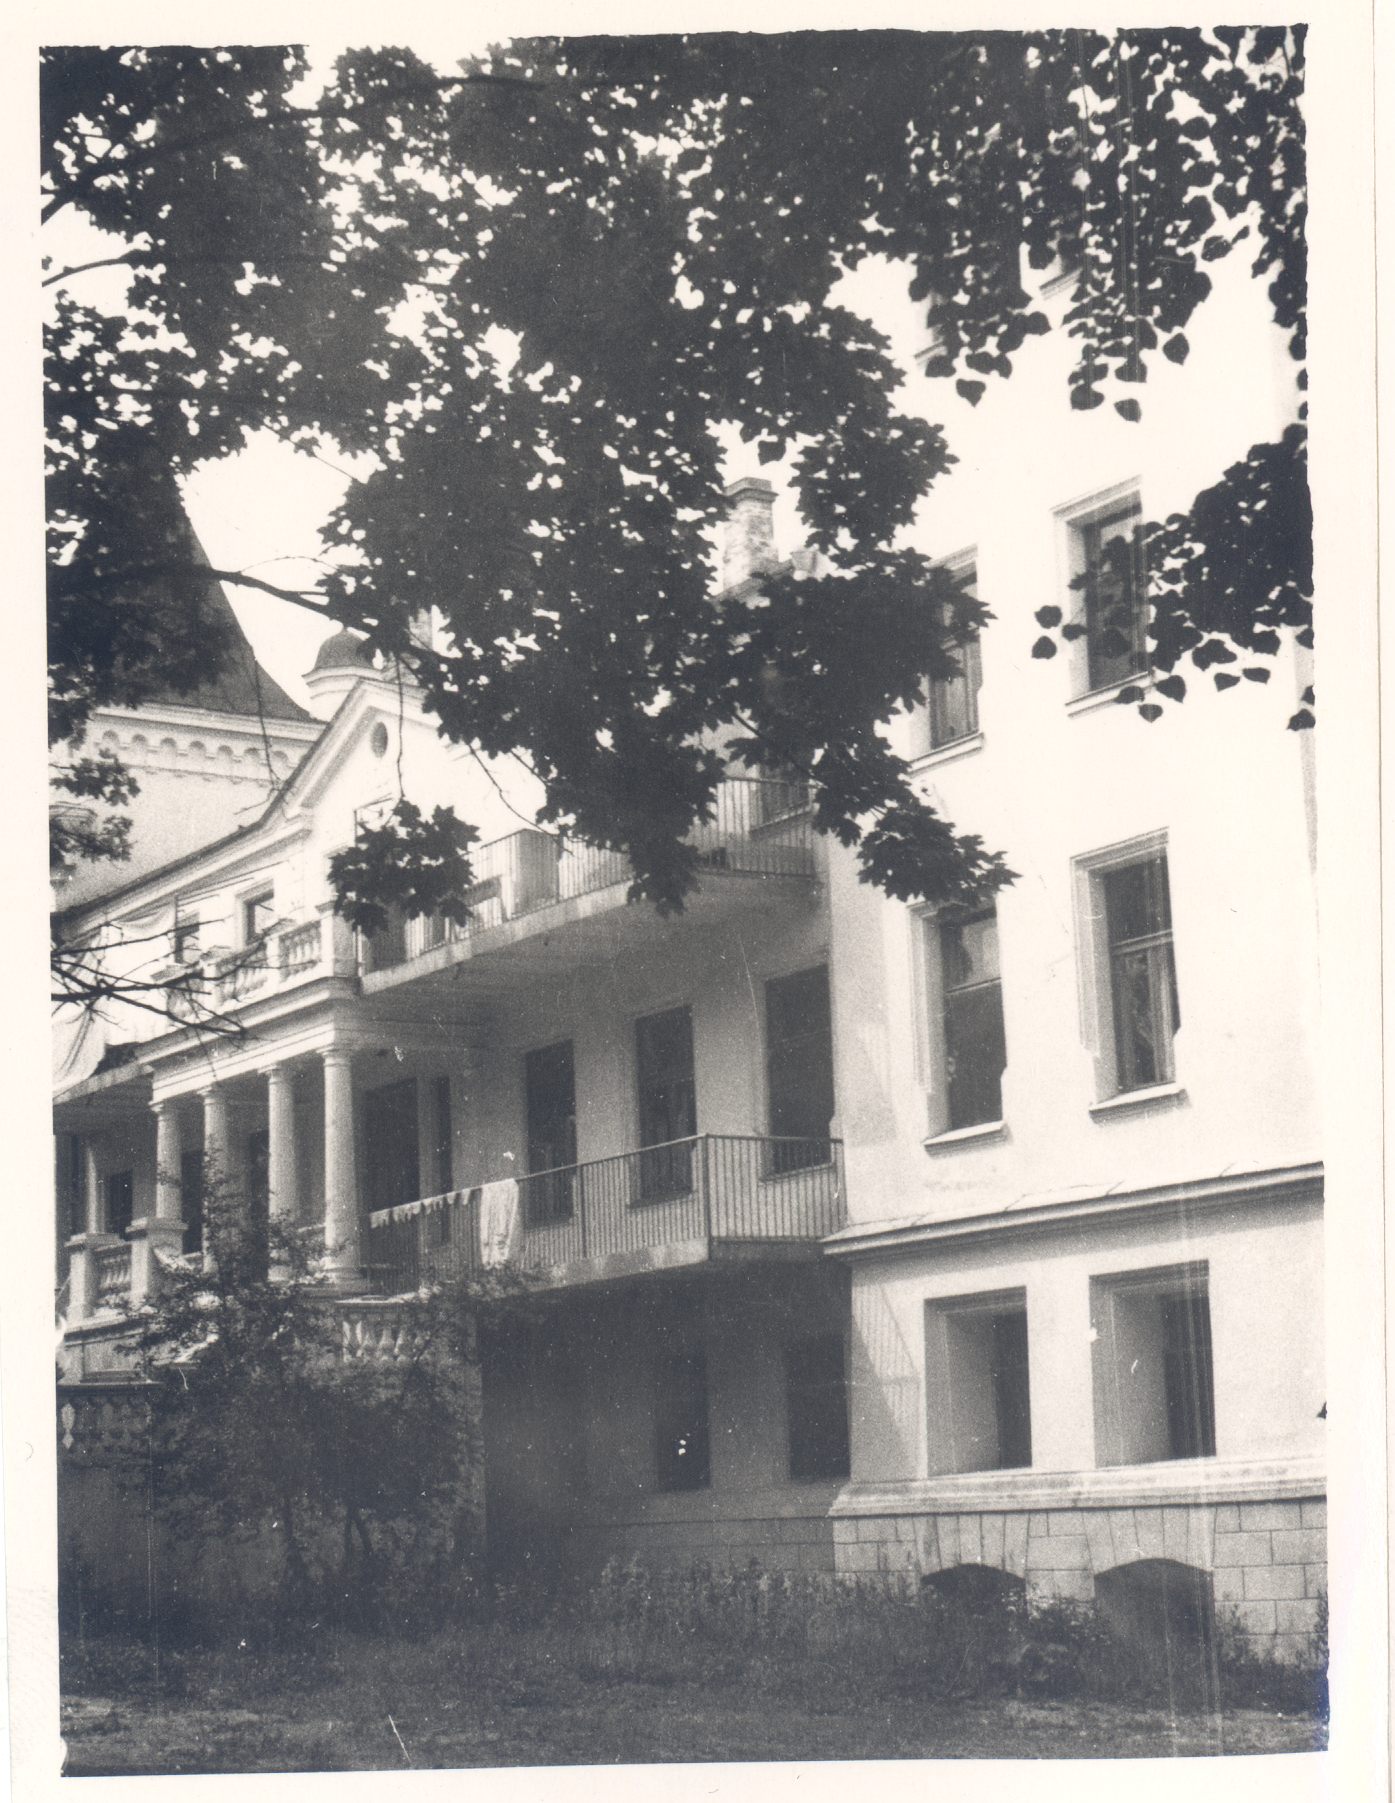 Turkey gentleman's house in 1961